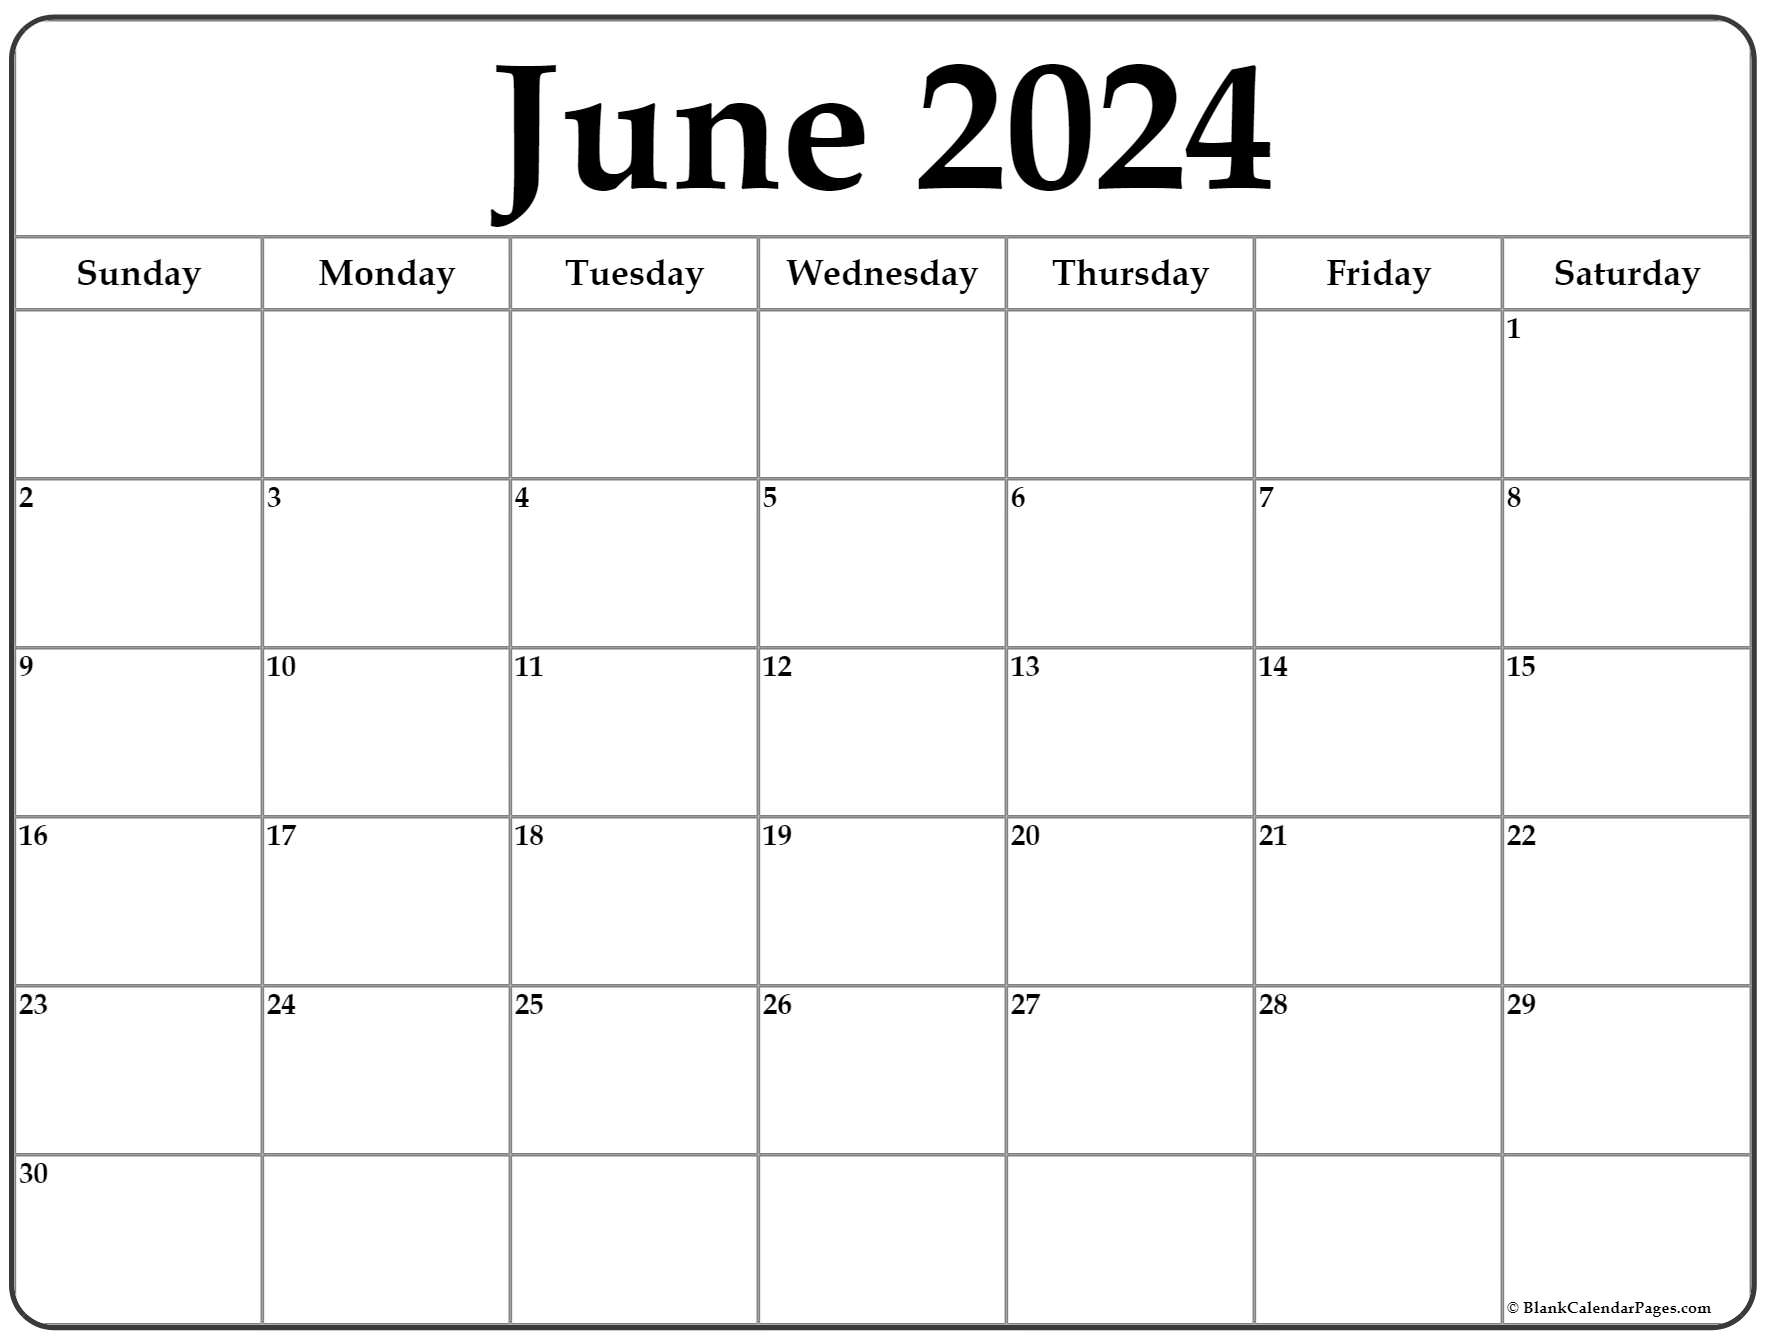 June Blank Calendar 2022 June 2022 Calendar | Free Printable Calendar Templates